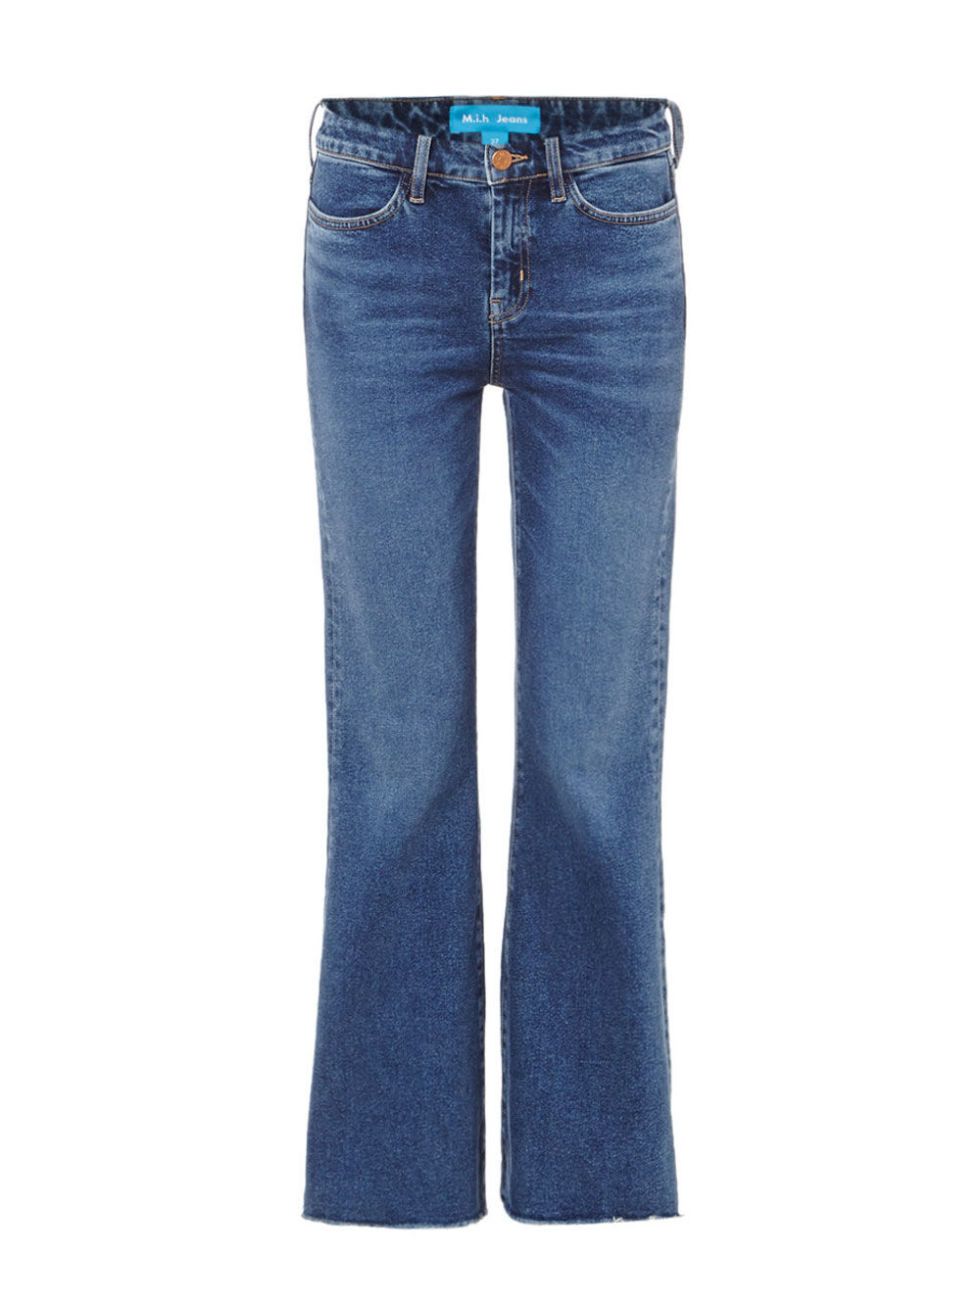 <p>M.I.H Jeans, € 255 - verkrijgbaar via <a href="https://go.shoppable.nl/r/83300281/19212486/ext" target="_blank">debijenkorf.nl</a></p>